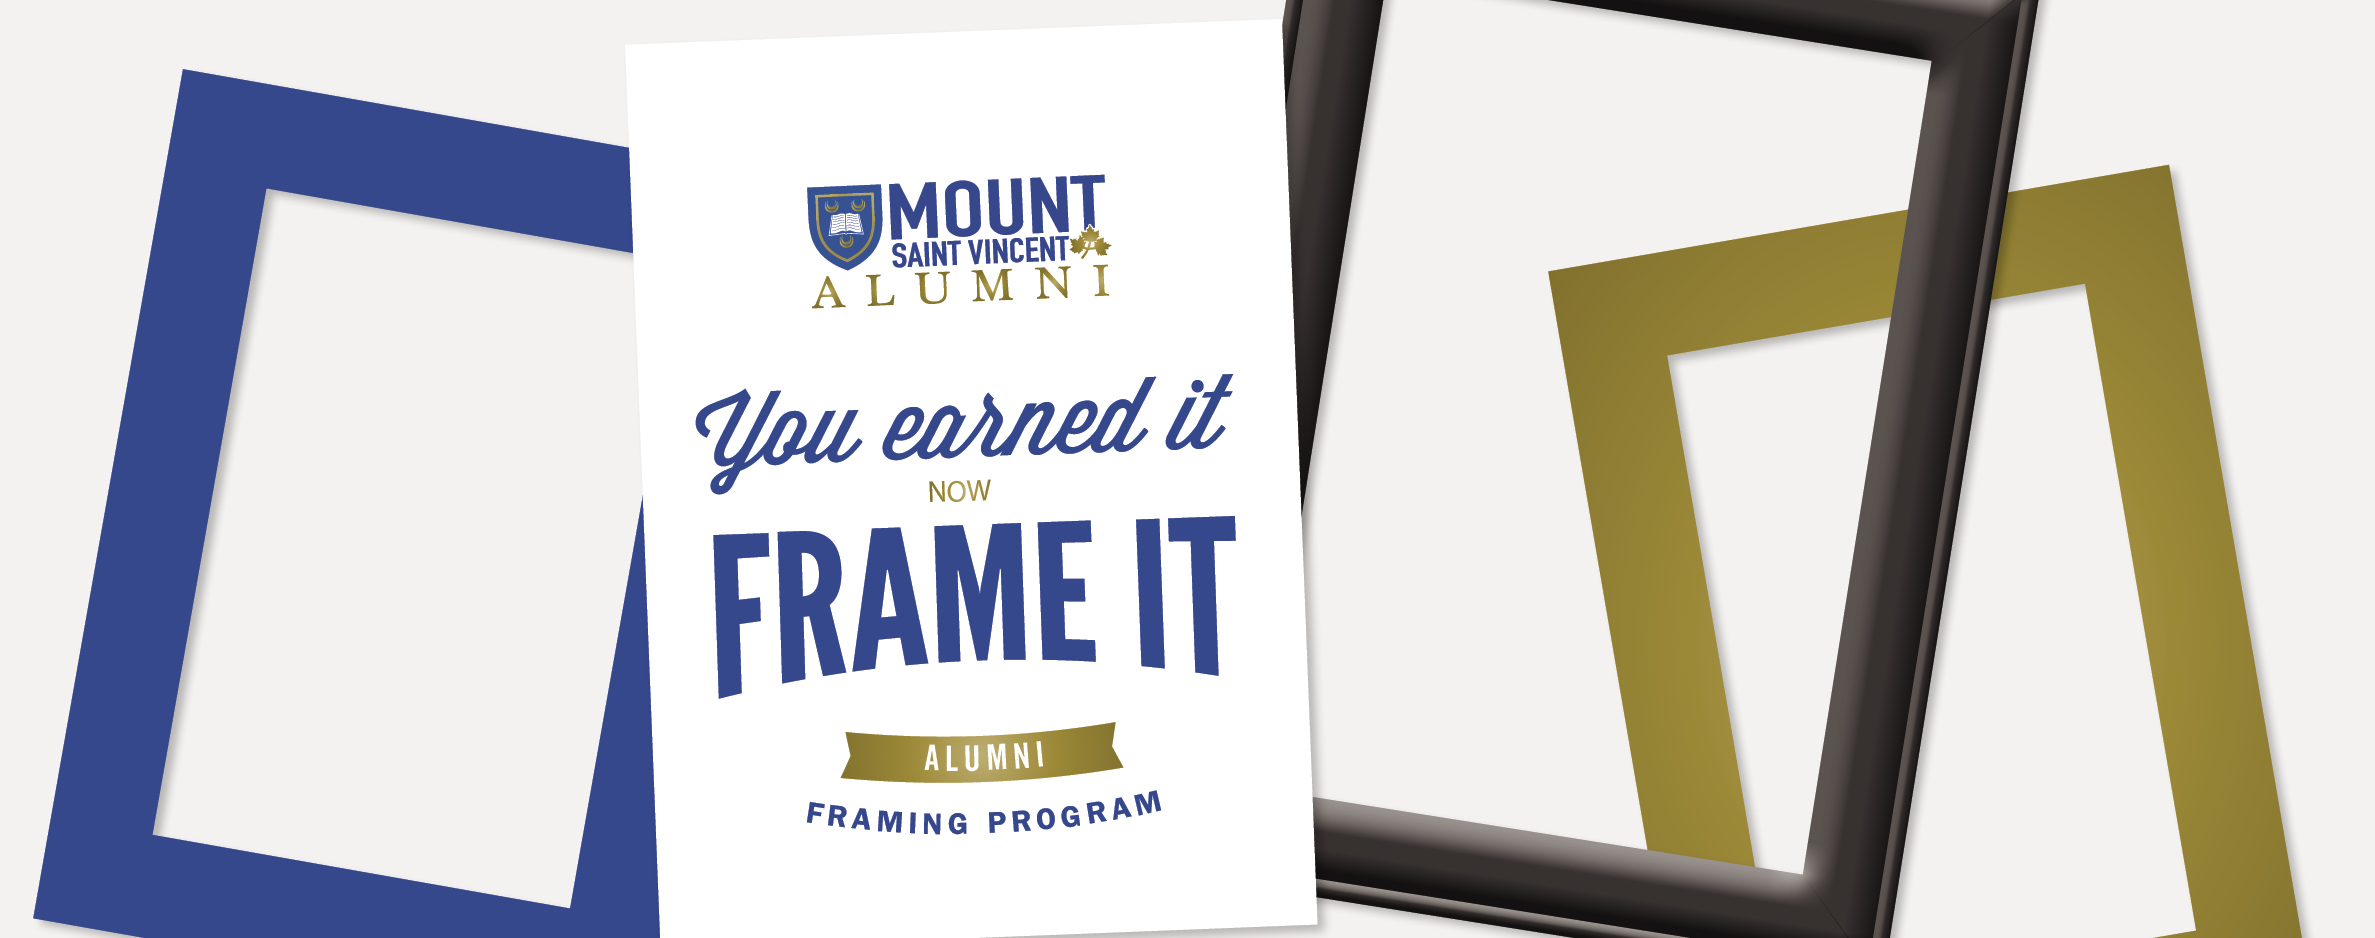 Mount Saint Vincent University Alumni Framing Program